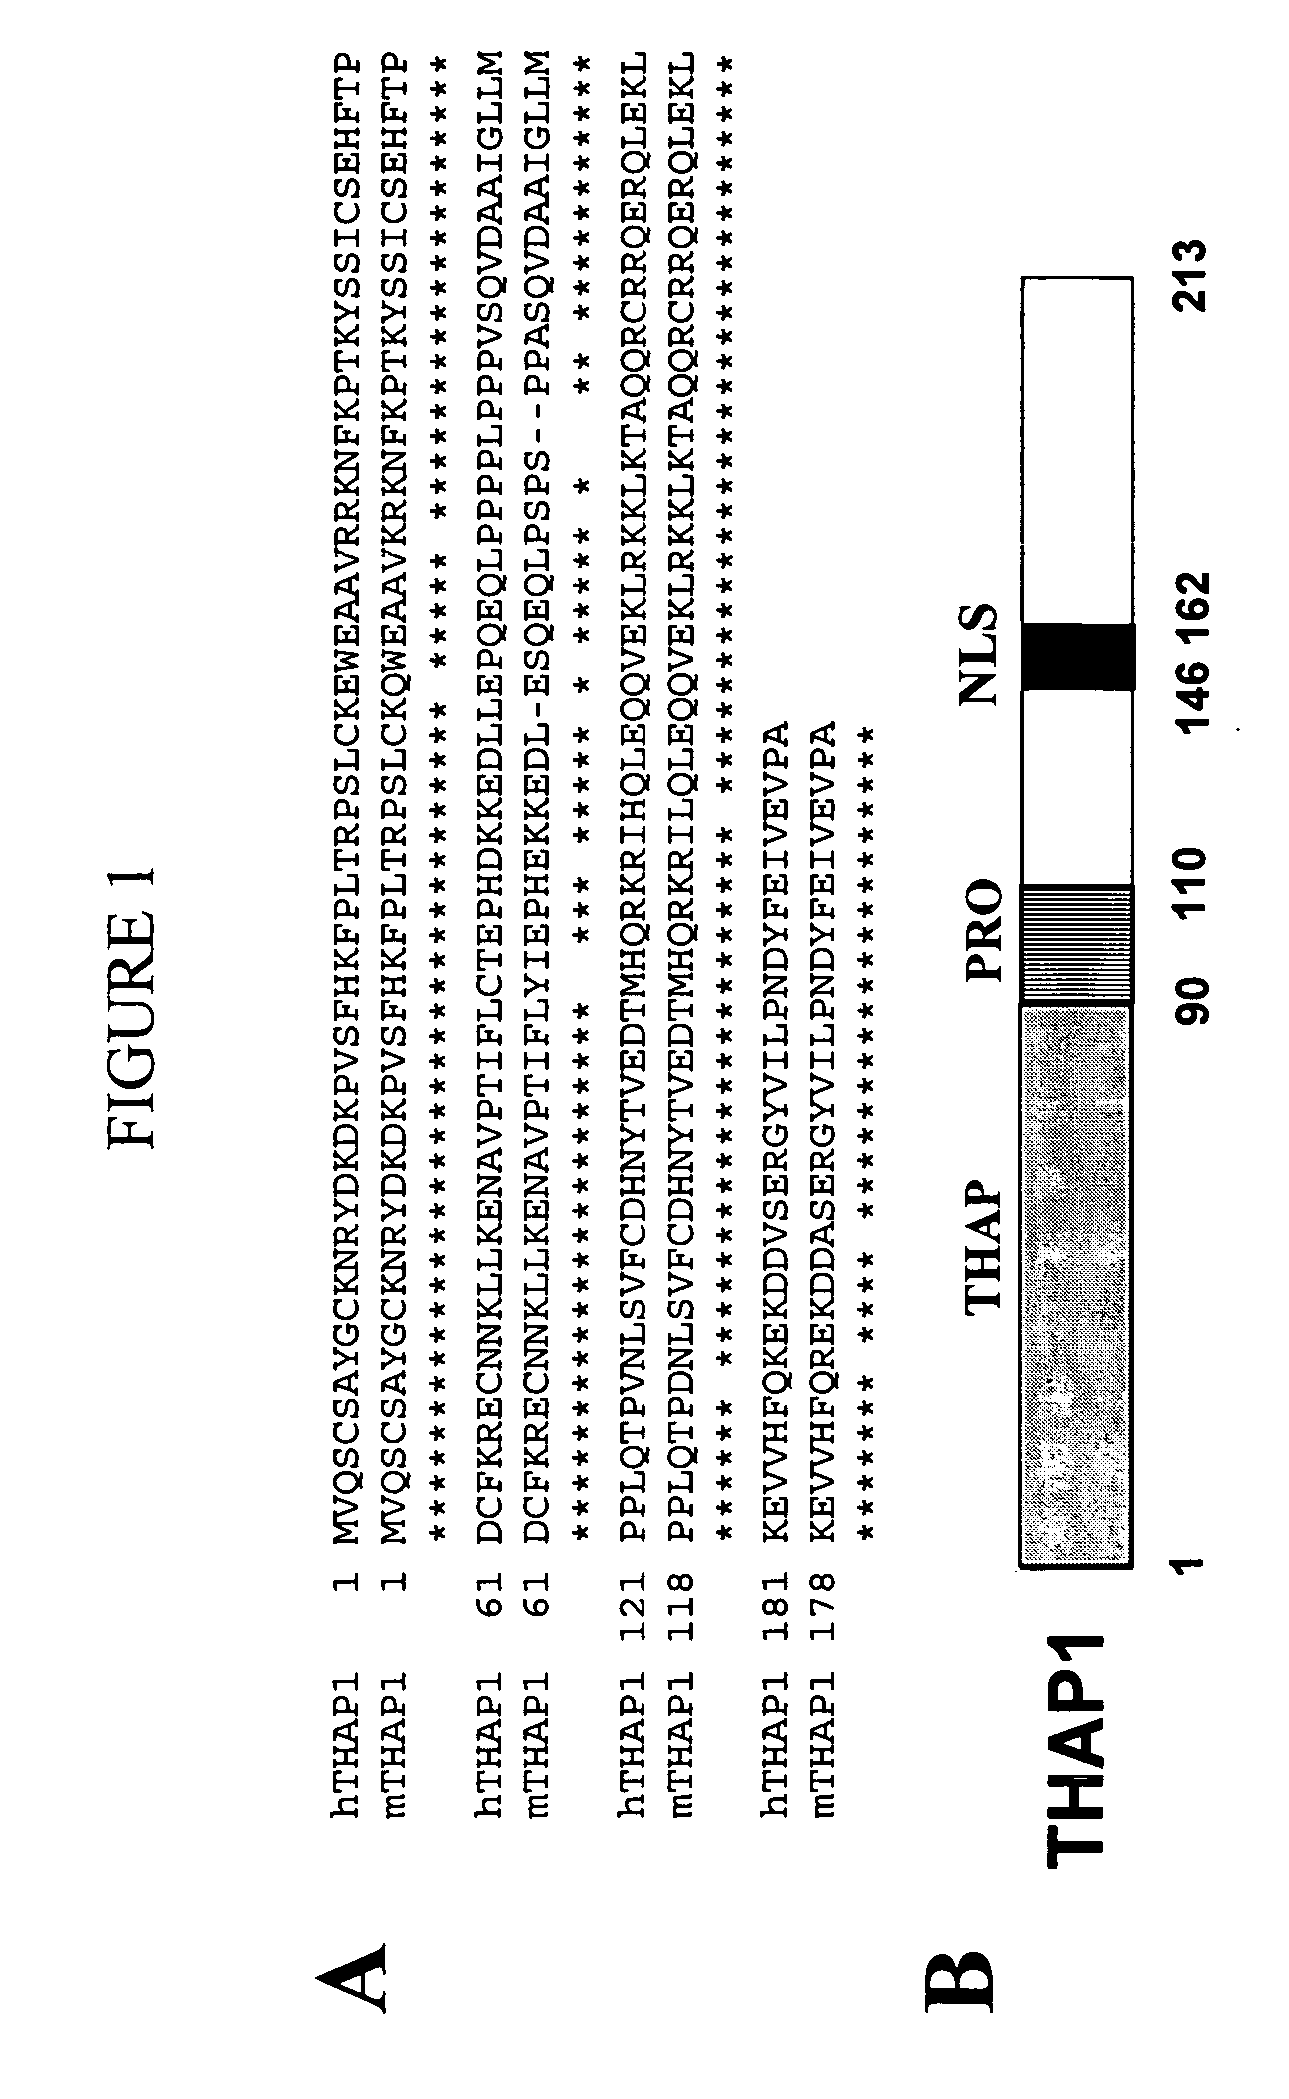 Activity of THAP-family chemokine-binding domains